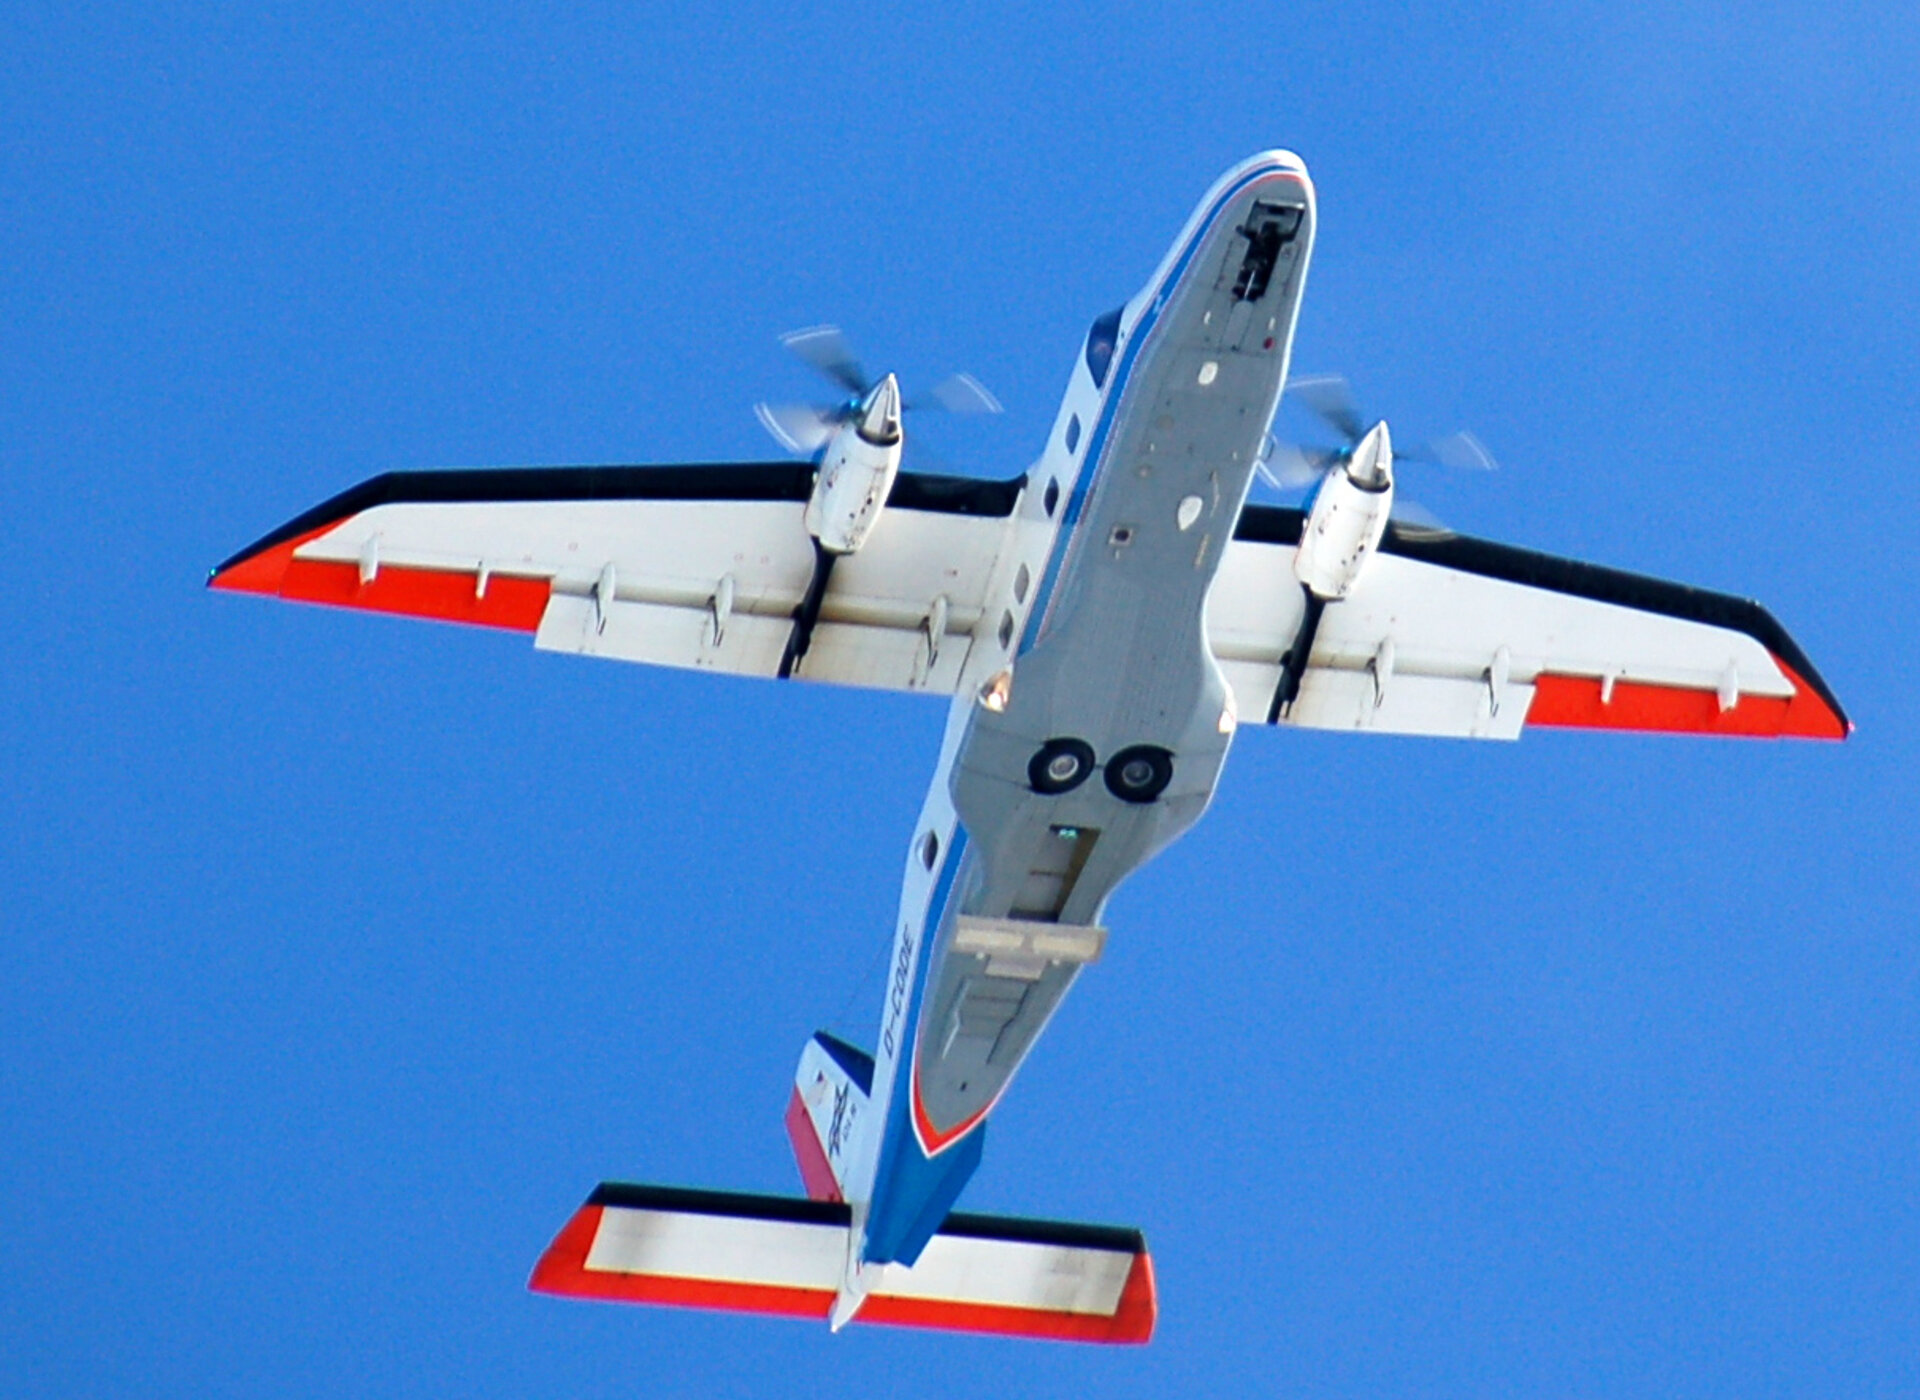 Dornier 228 – the CryoVex 2007 airborne platform